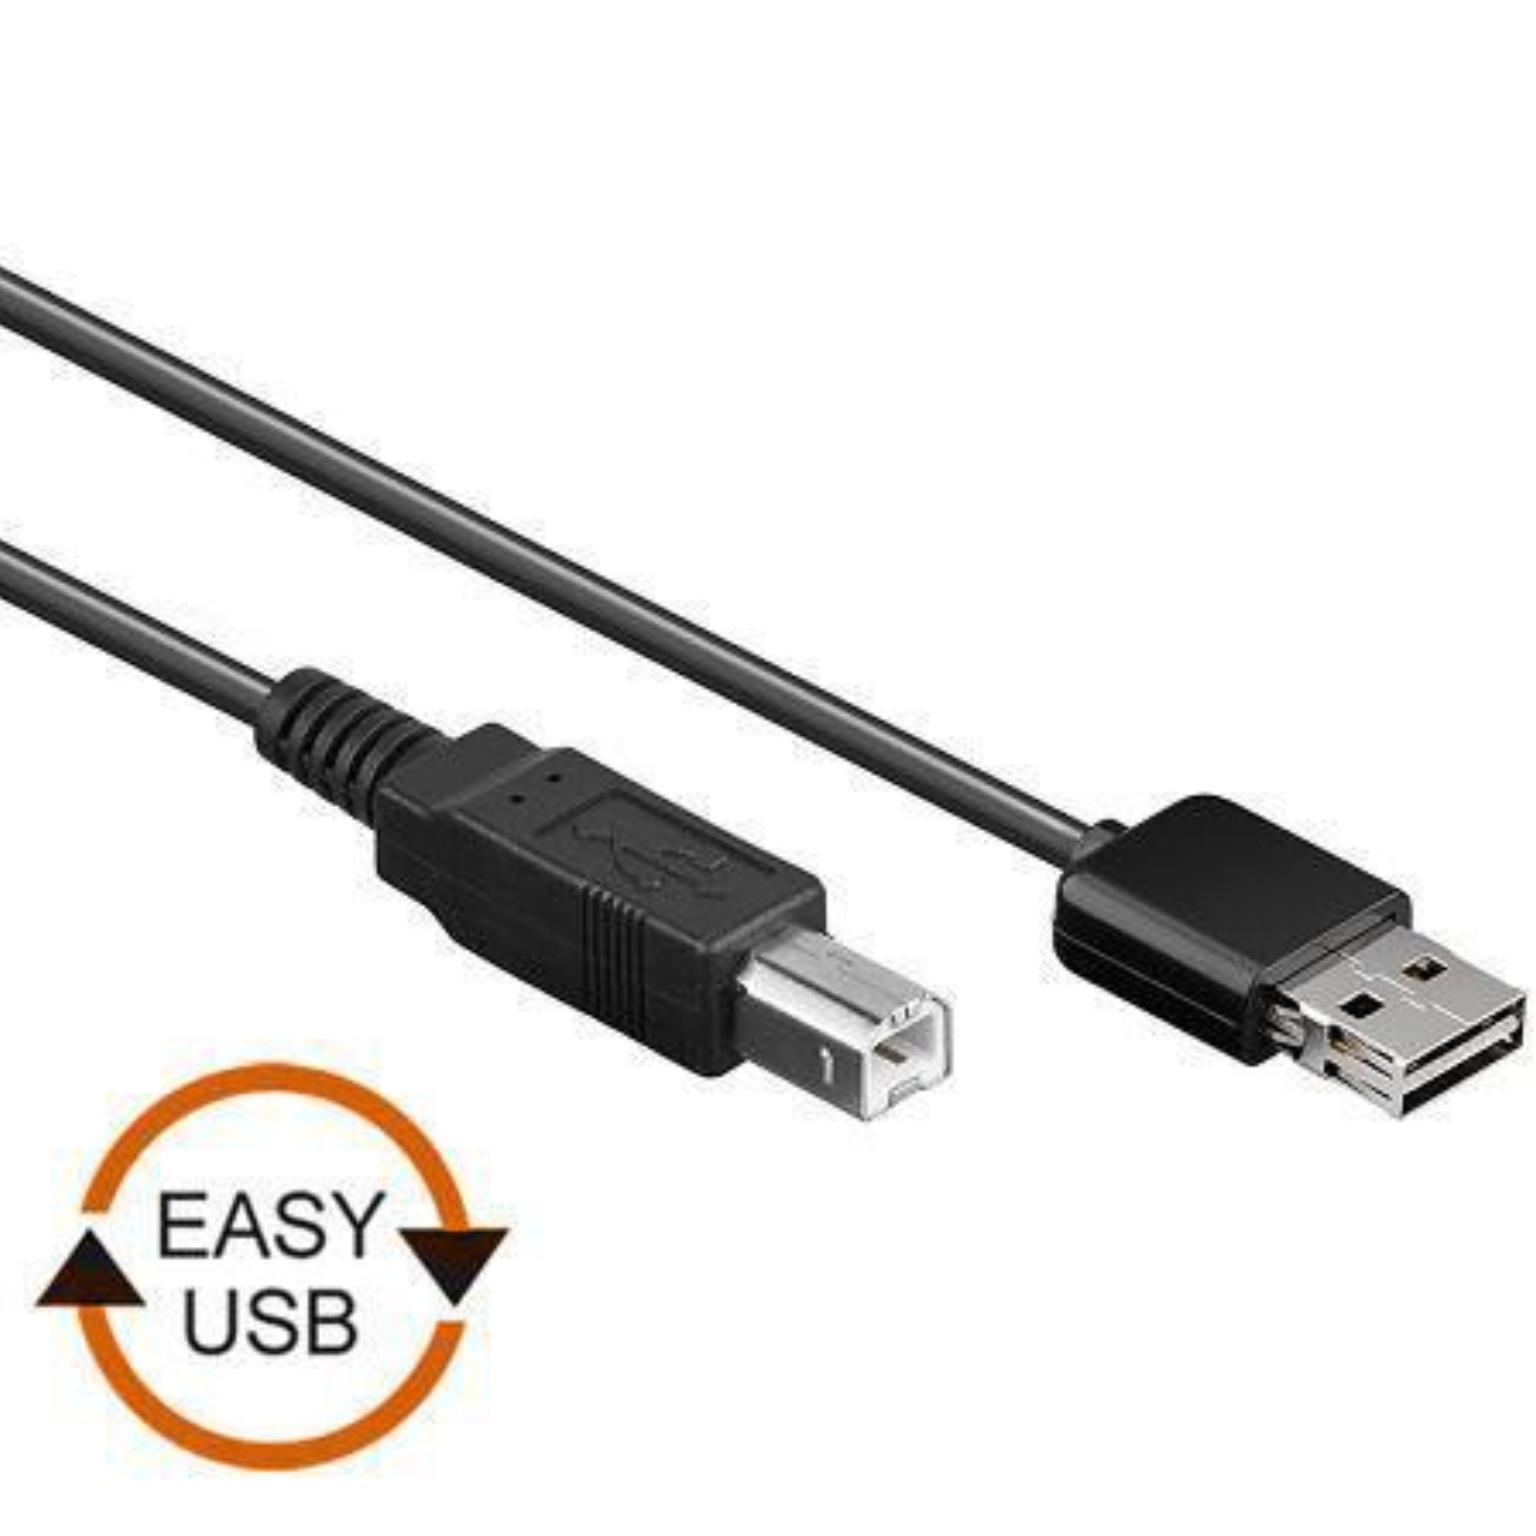 USB-B datakabel - 1 meter - Goobay